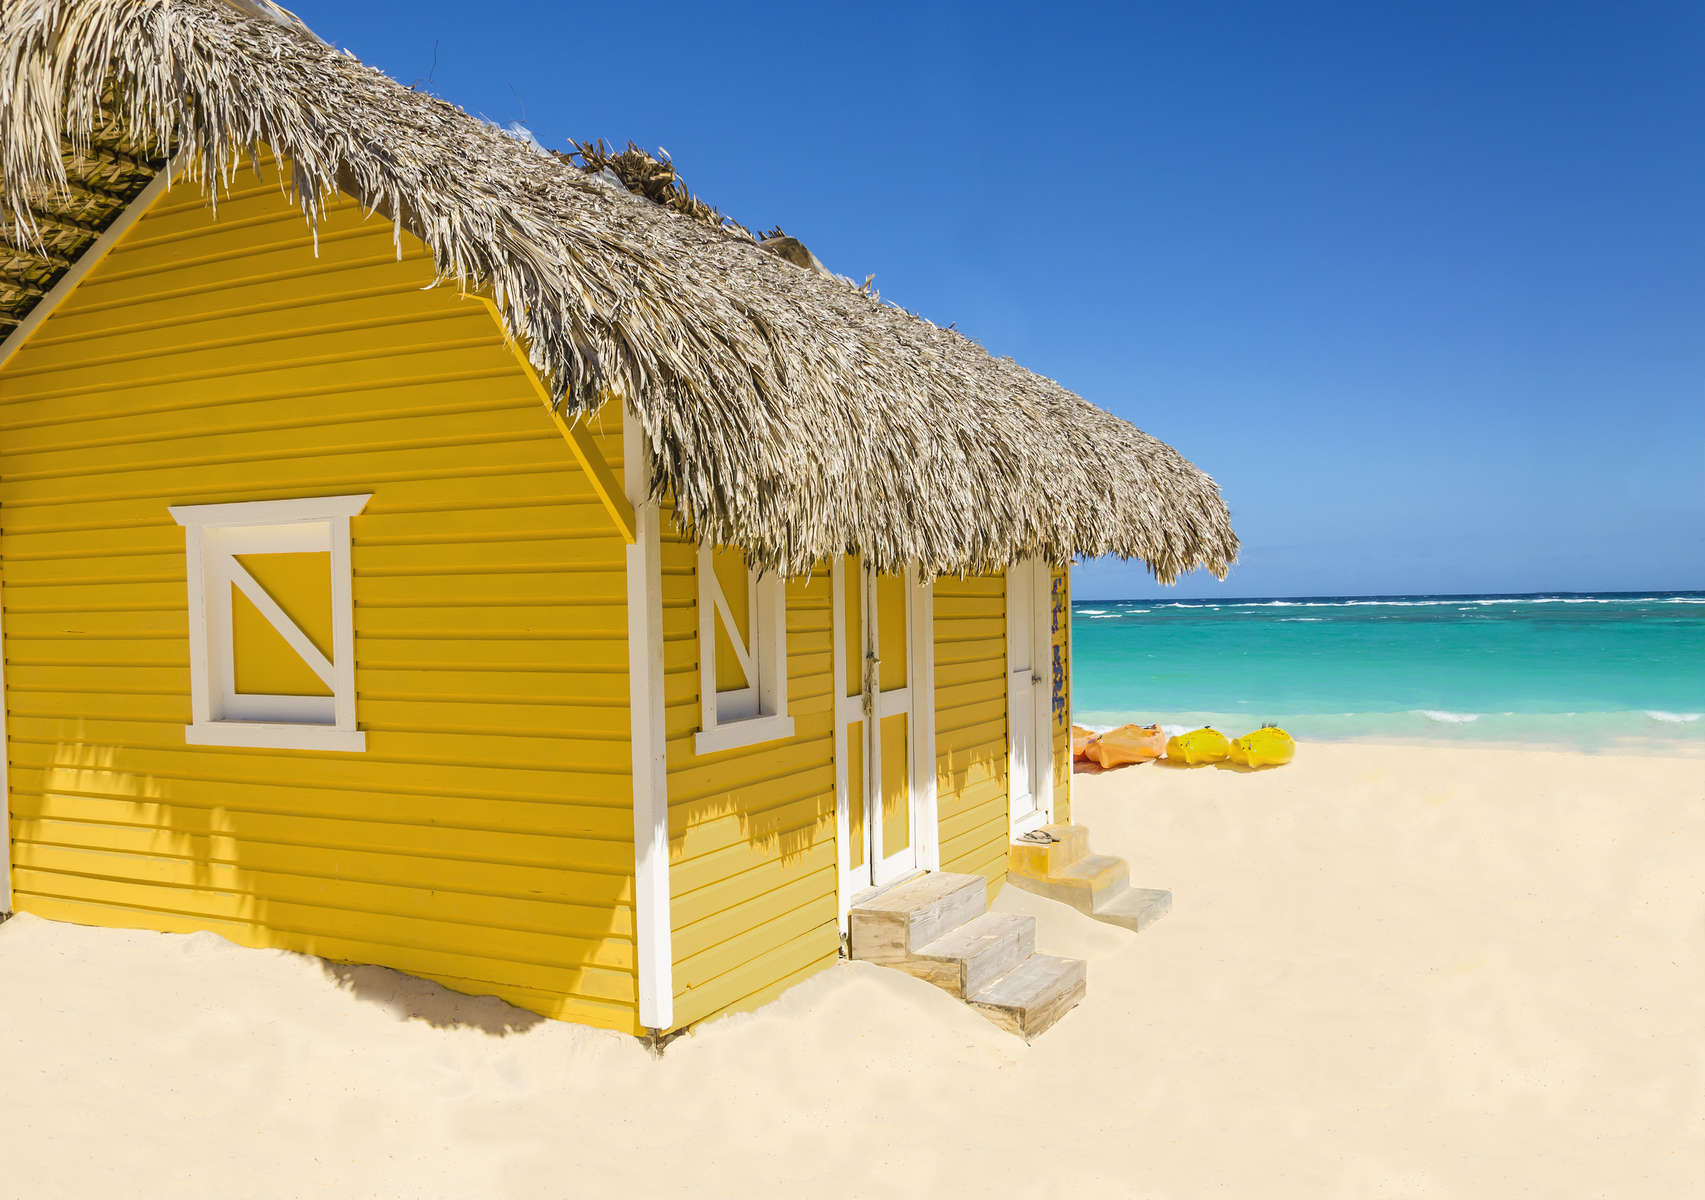 Wooden yellow beach cottage